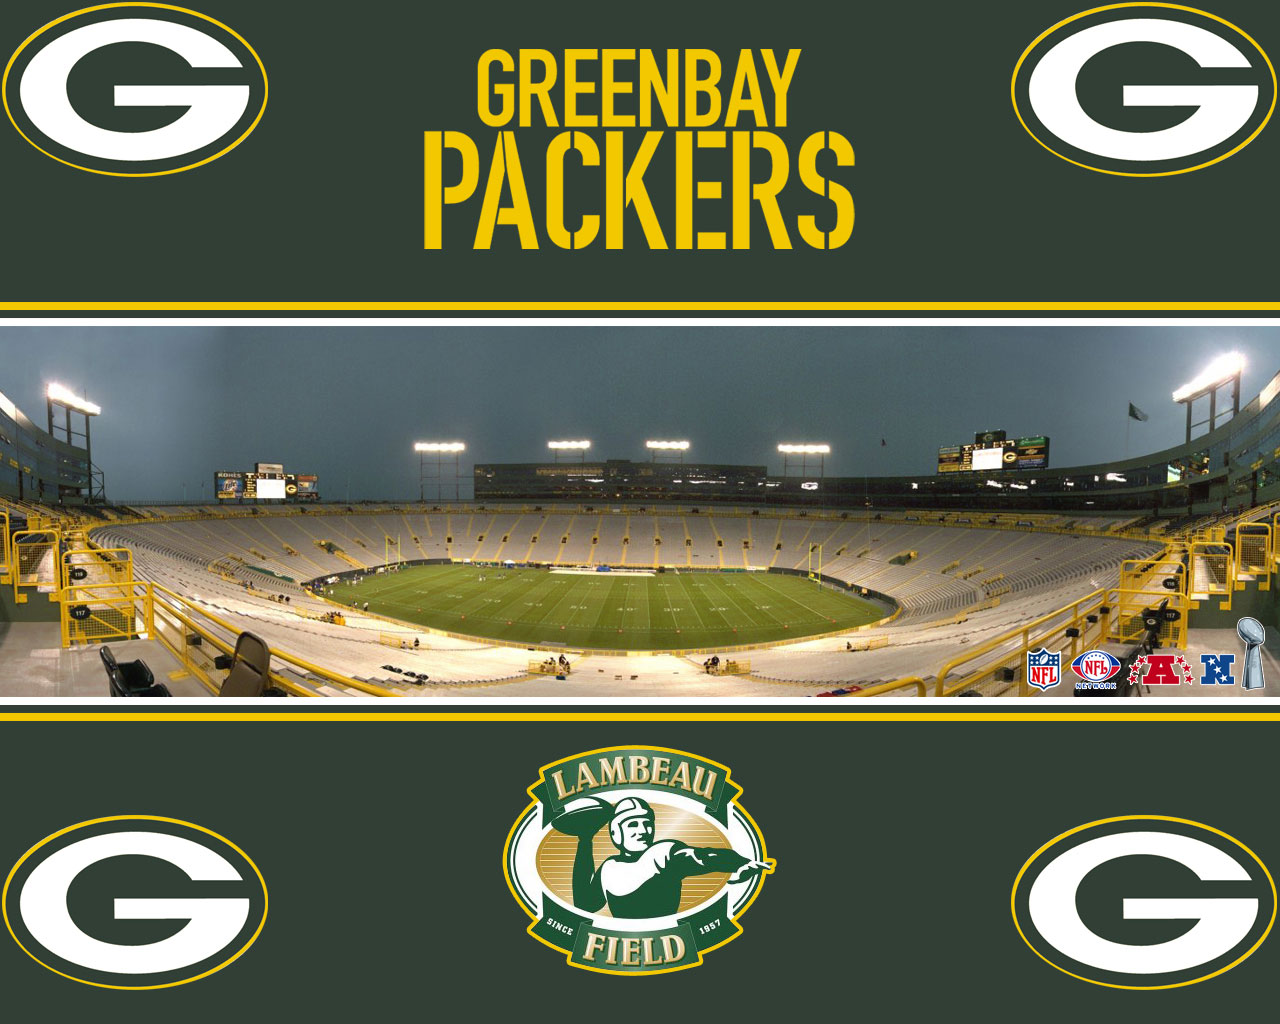 Green Bay Packers stadium wallpaper1280 x 1024